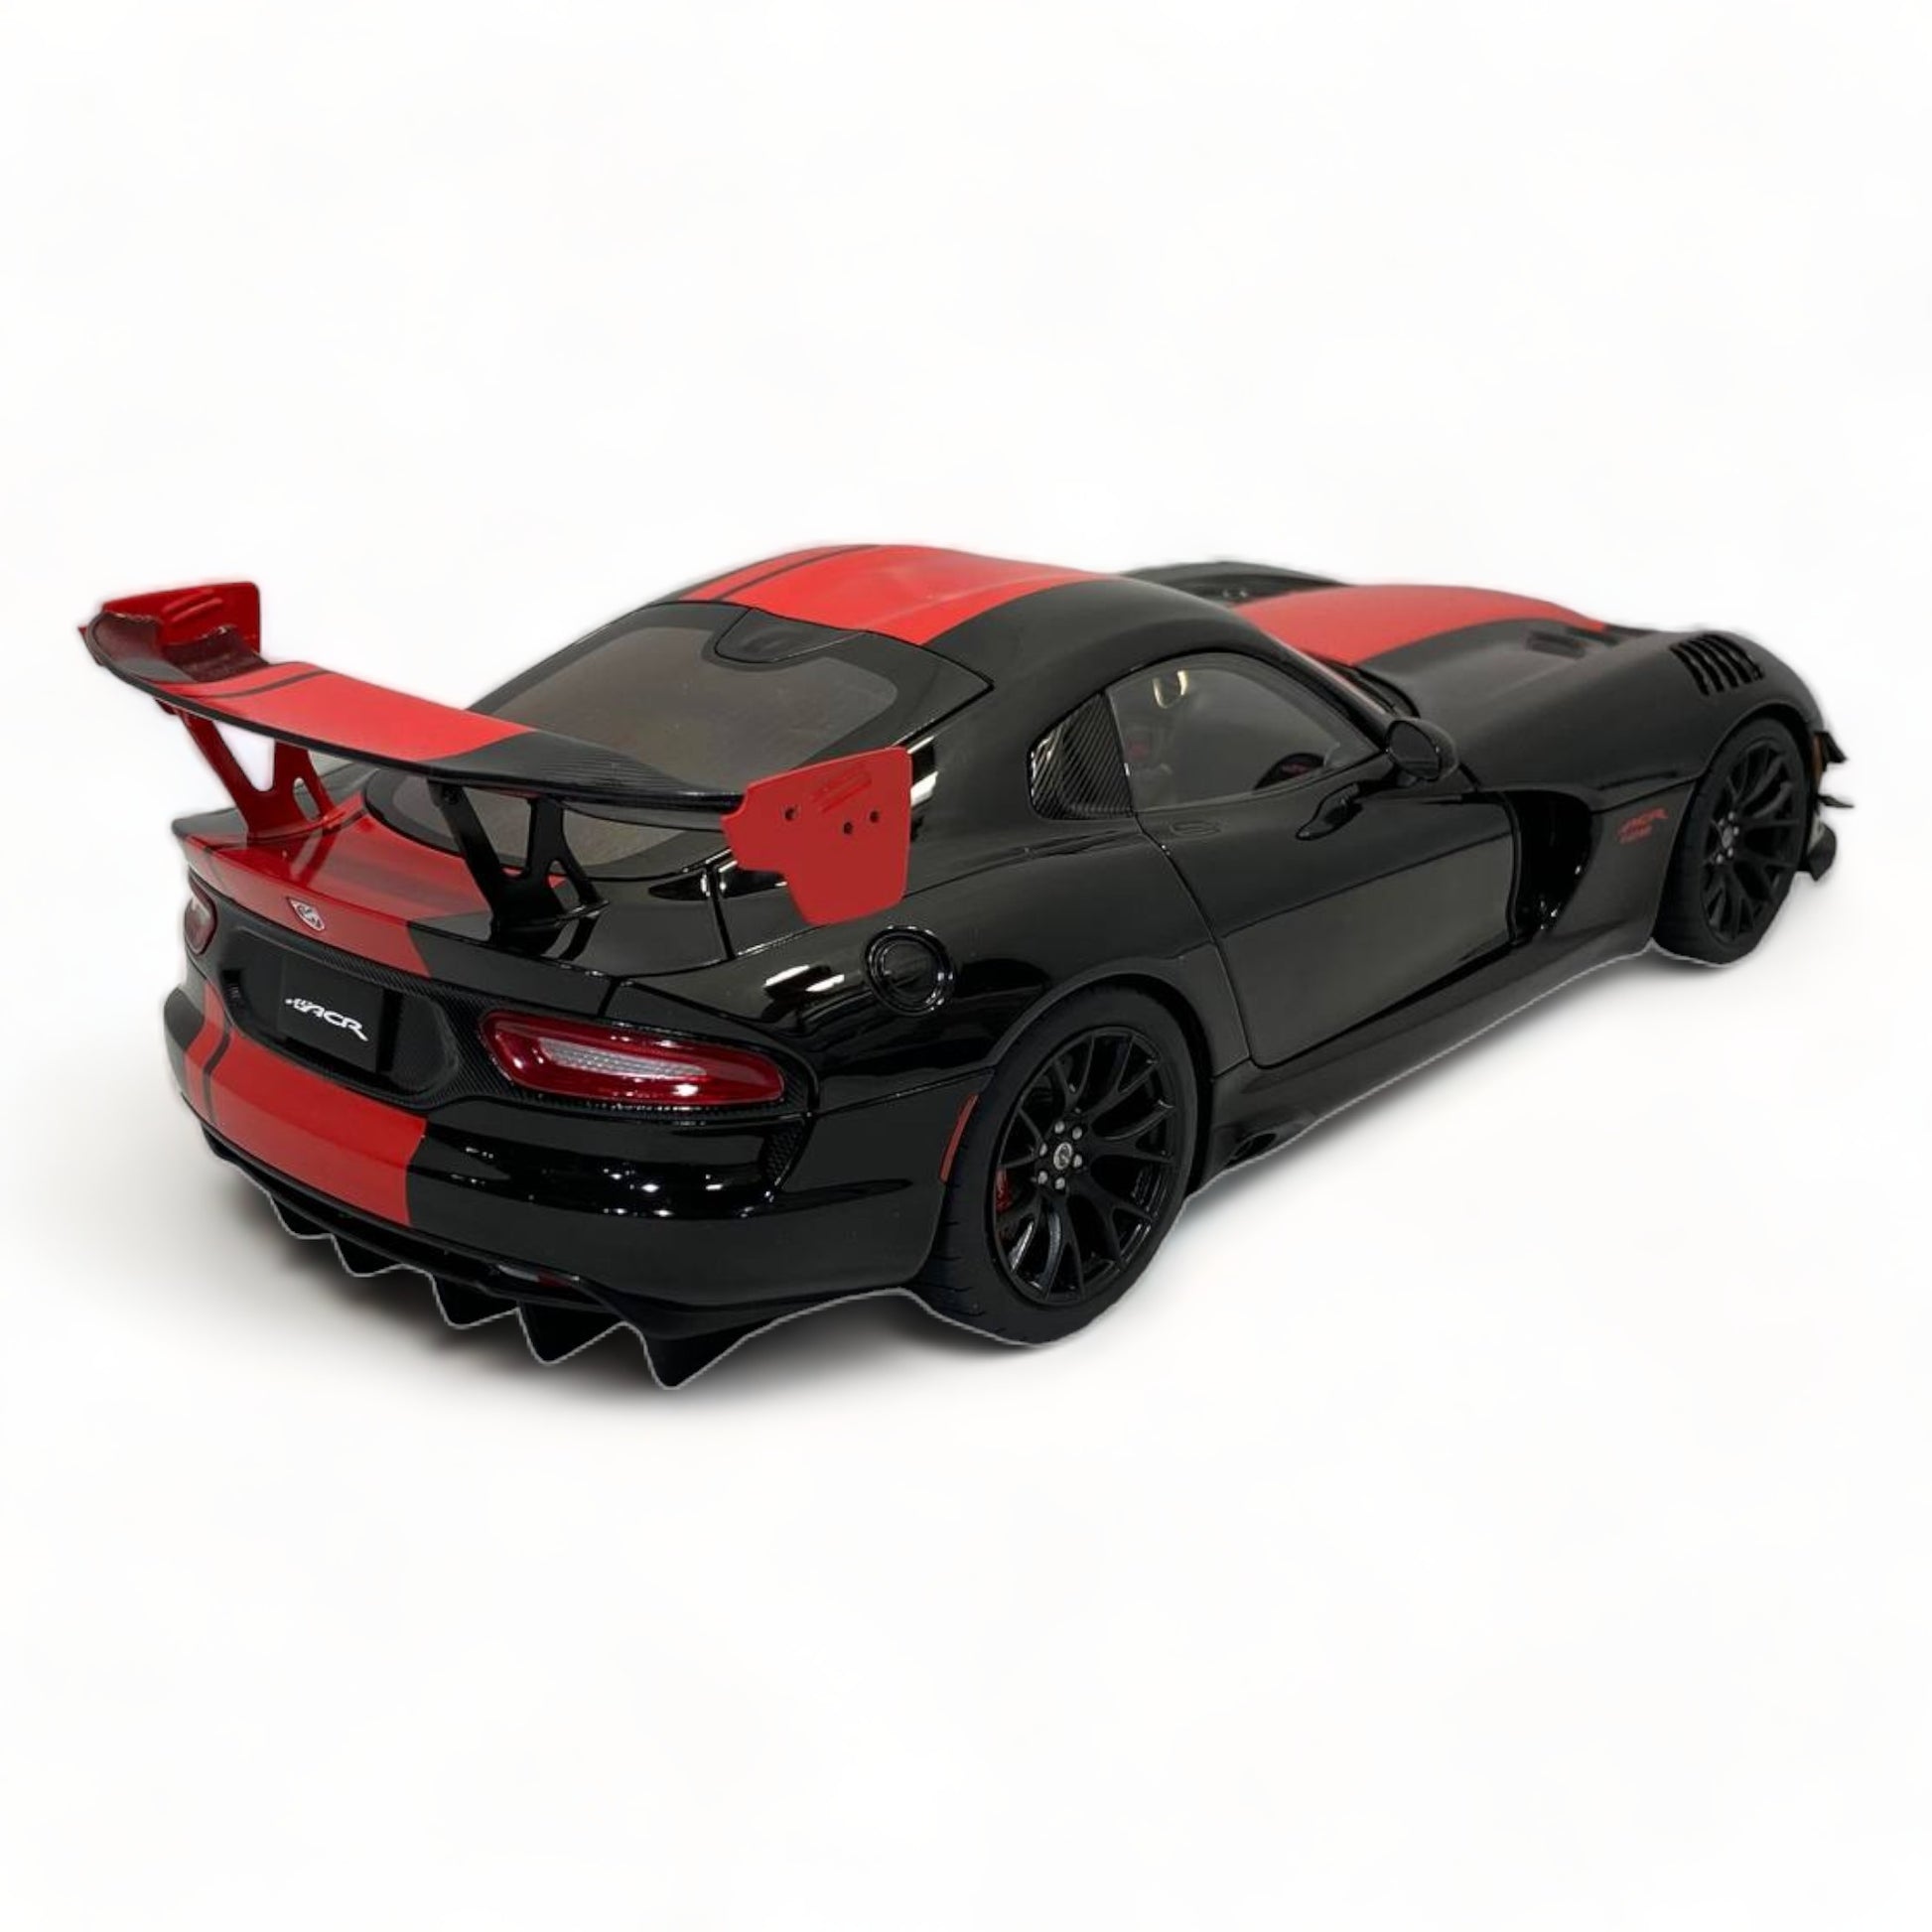 Autoart Dodge Viper ACR 1/18 Scale - Sleek Black/Red (2017)|Sold in Dturman.com Dubai UAE.